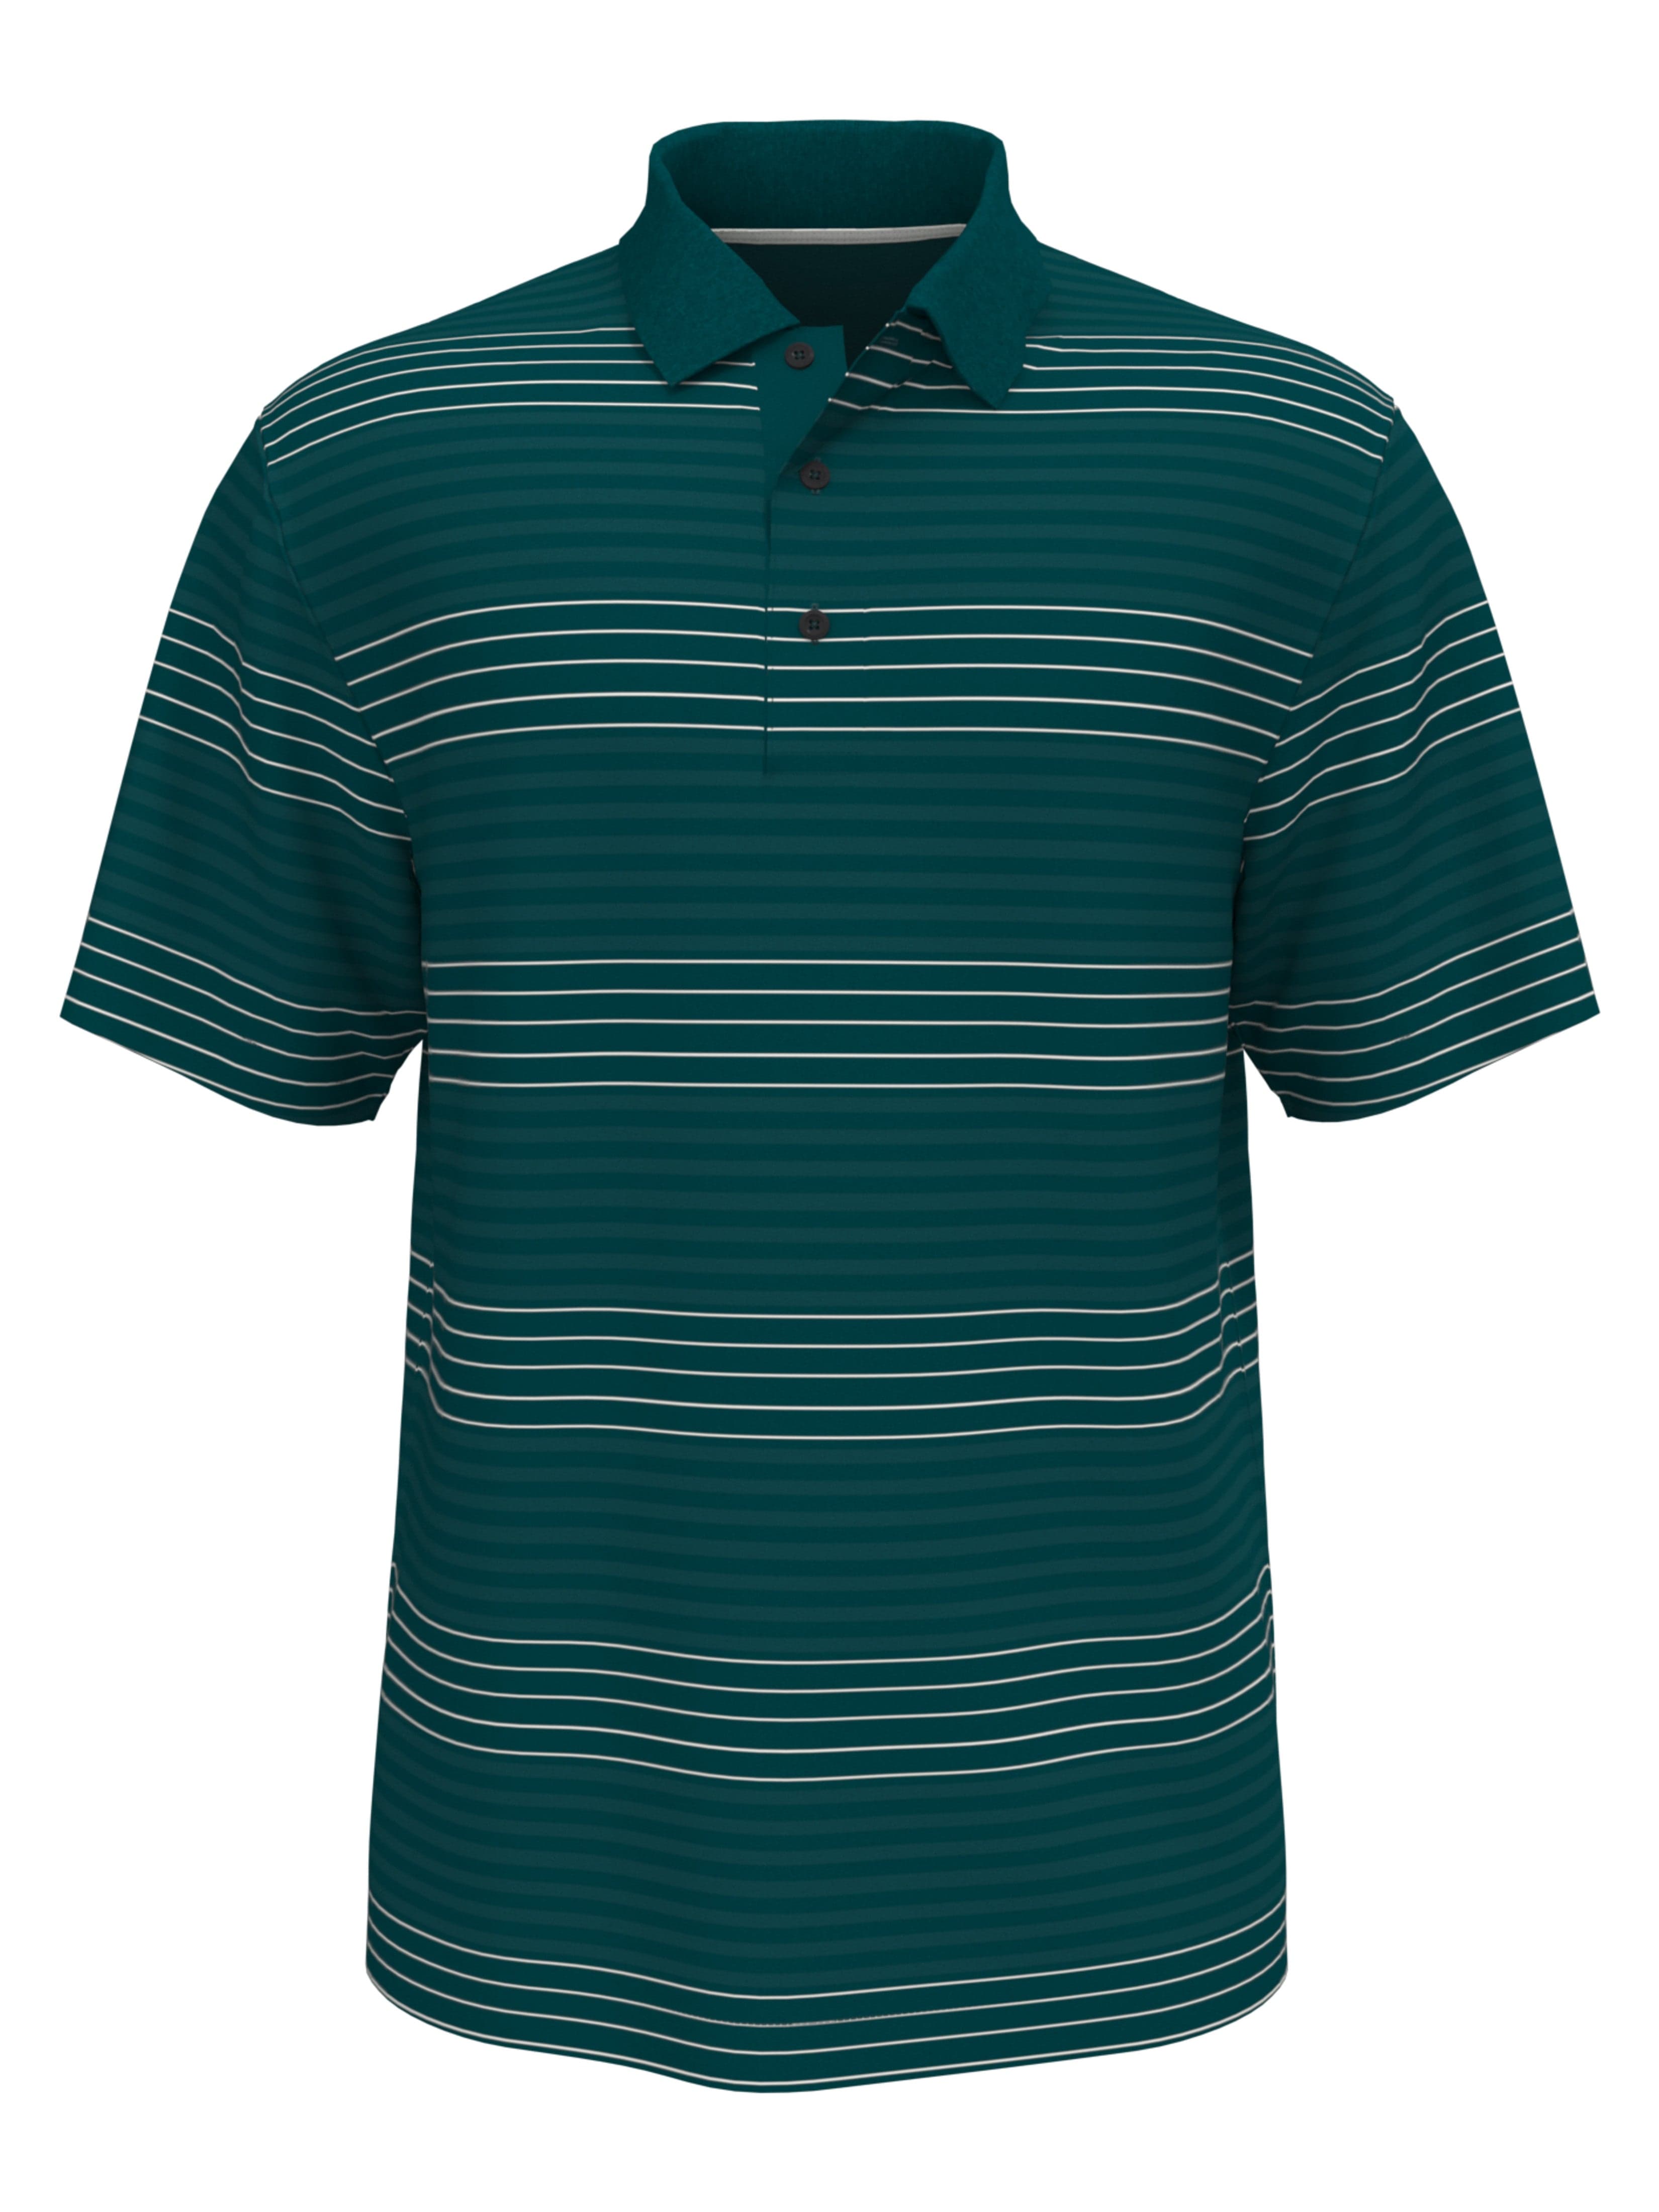 Jack Nicklaus Mens Shadow Energy Stripe Polo Shirt, Size Small, Atlantic Deep Green, 100% Polyester | Golf Apparel Shop